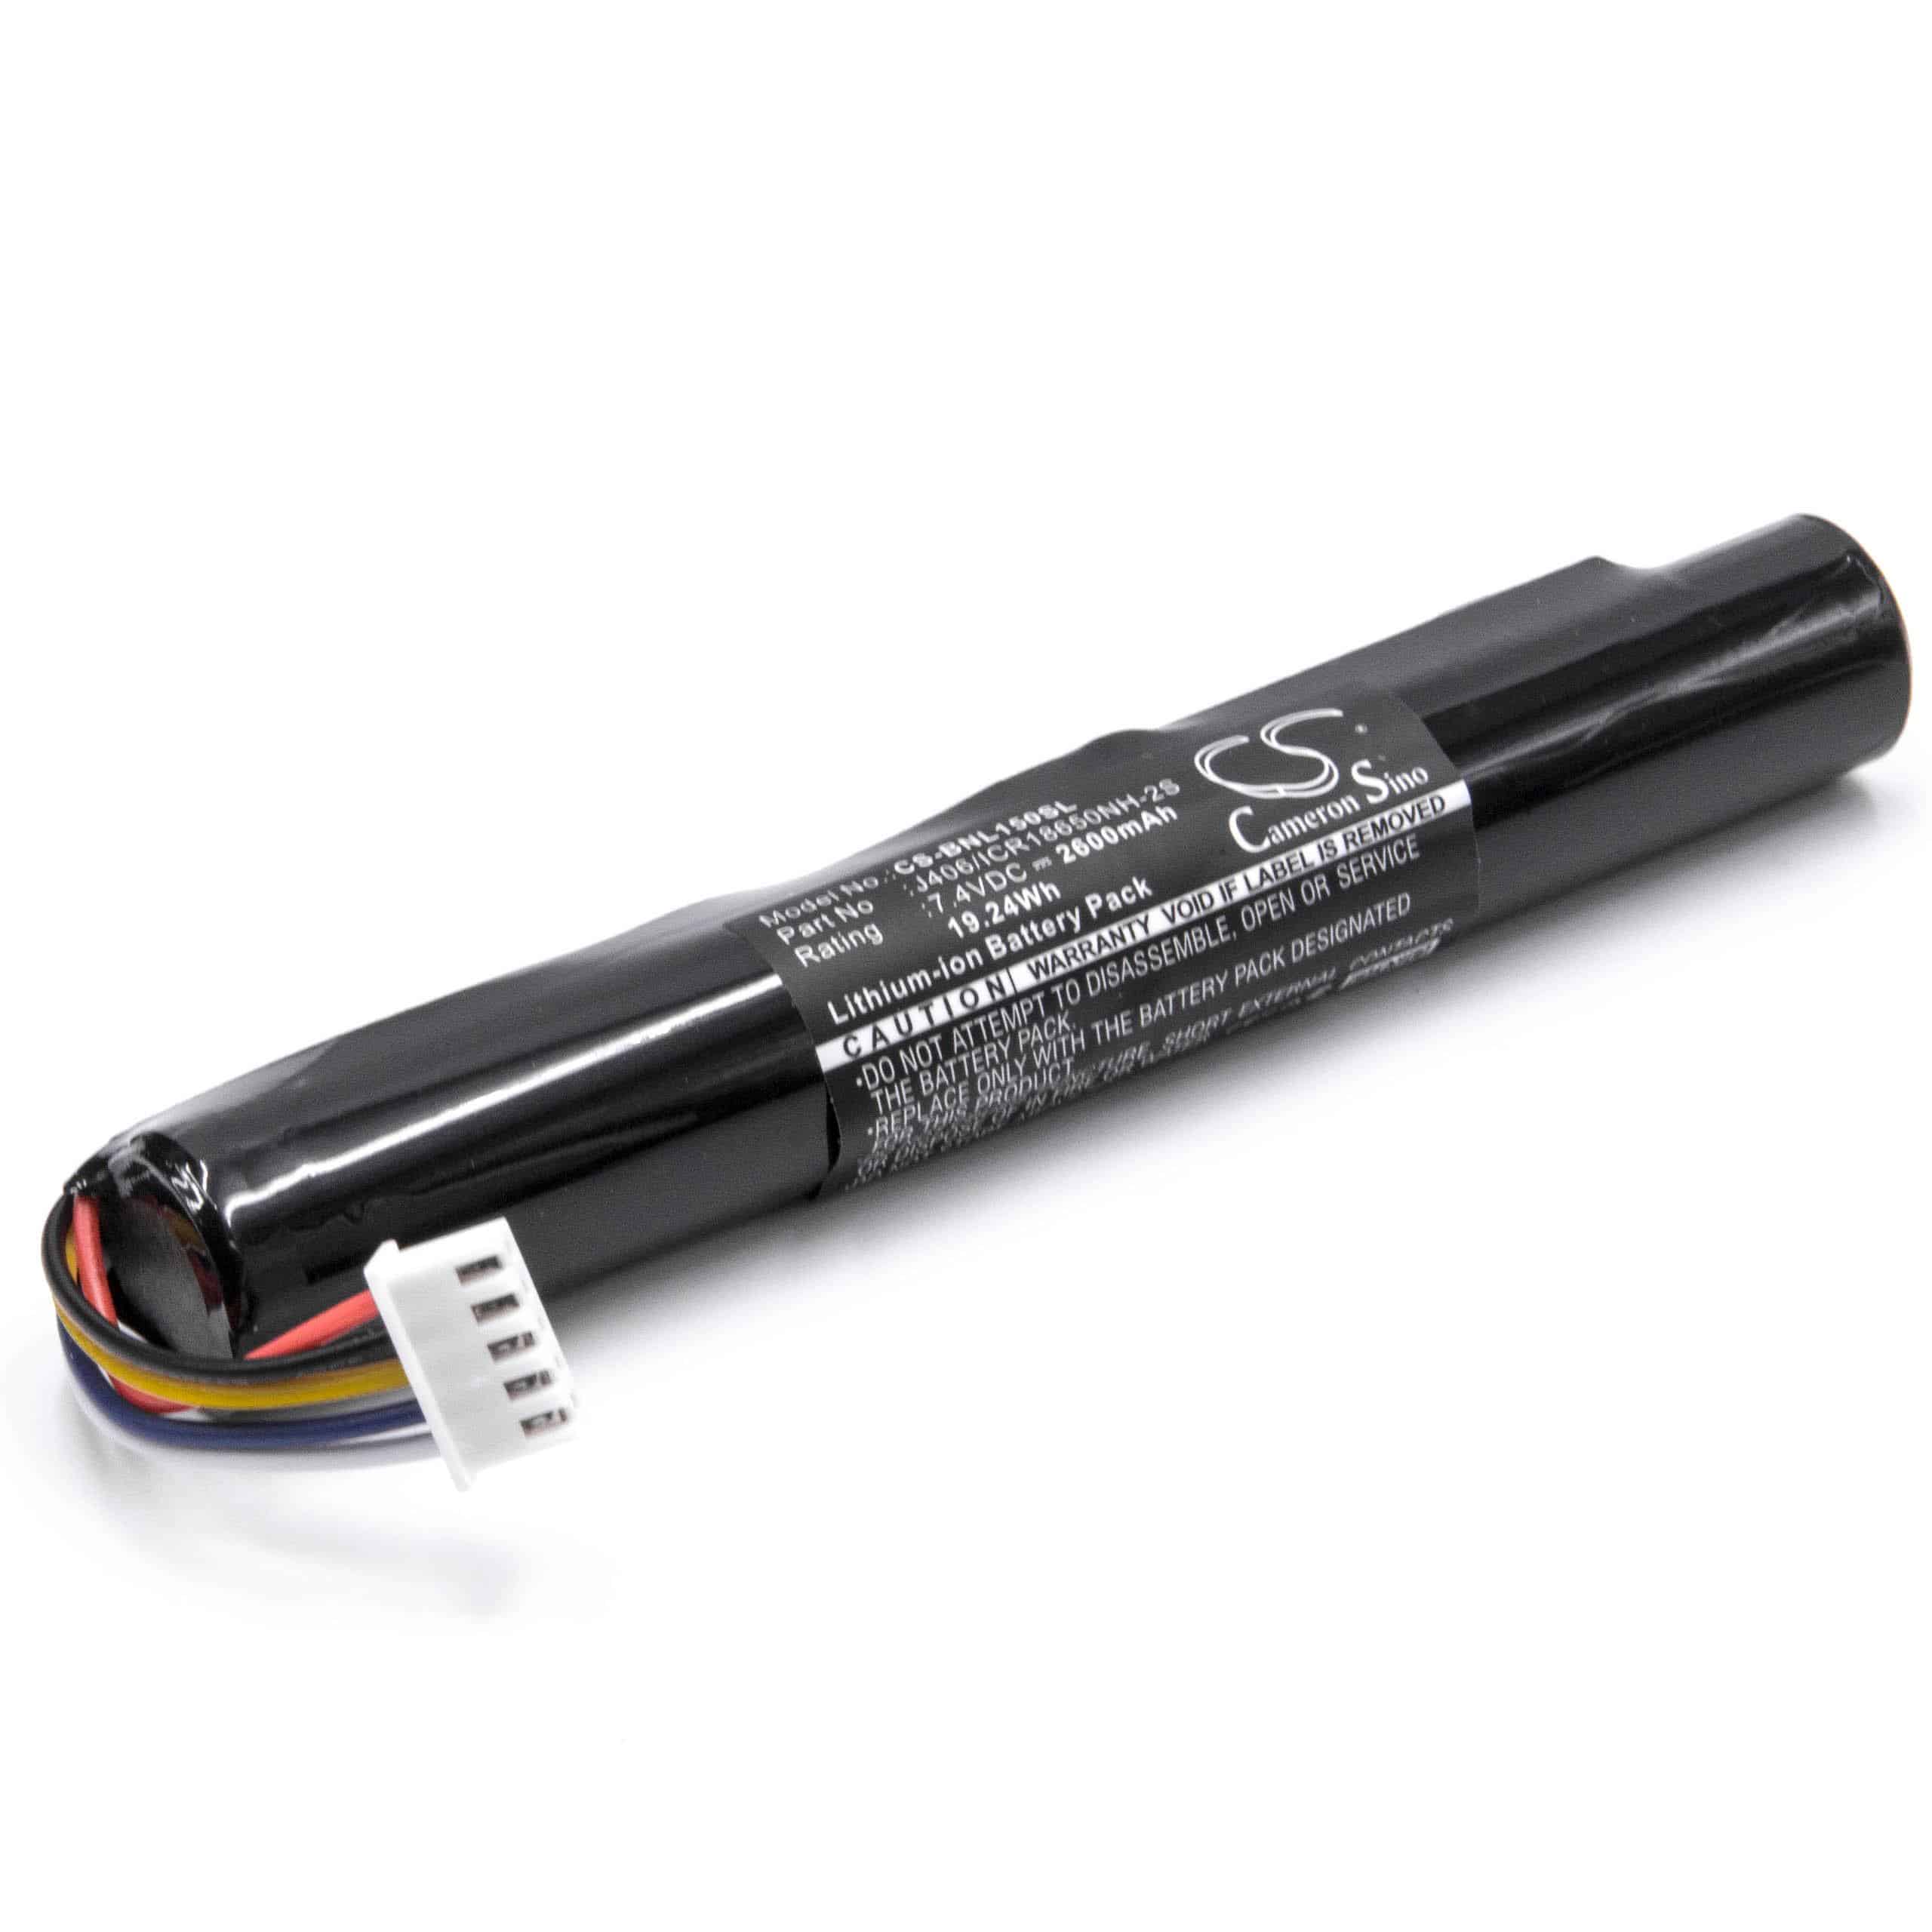 Batteria sostituisce Bang & Olufsen J406/ICR18650NH-2S per altoparlanti Bang & Olufsen - 2600mAh 7,4V Li-Ion